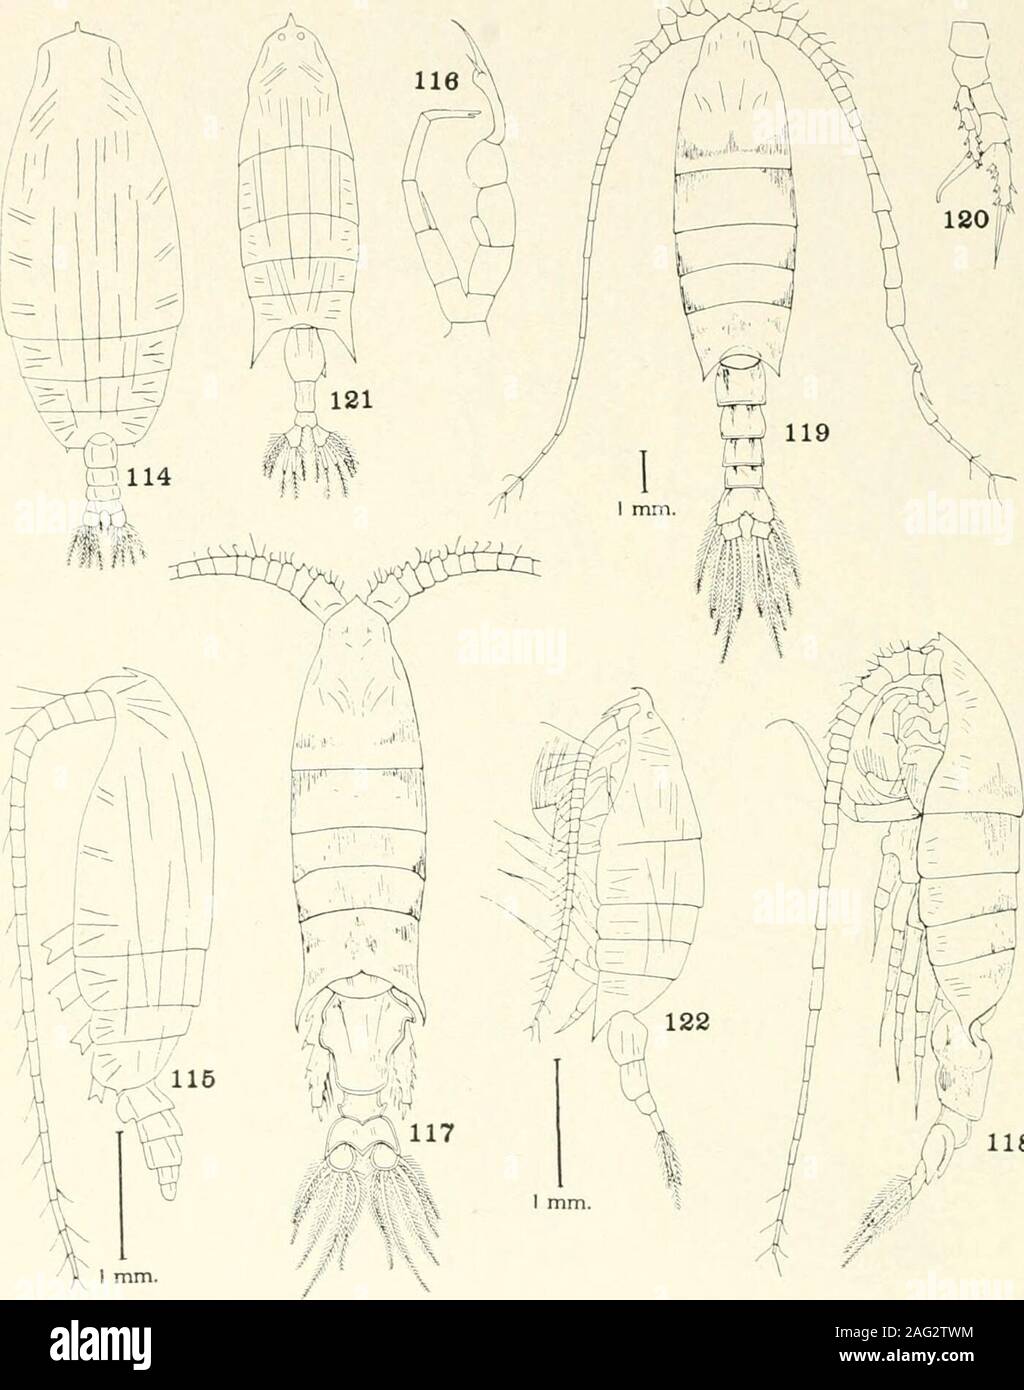 . Bulletin - United States National Museum. 109 Species of Euchirella, arietellus. and Gaetanus. 101-106, Euchirella grandicornis, new species: 101, Dorsal vii male; 103, lateral view, female; 104, second maxill, female; 106, fifth le107. Arietellus giesbrechti Sars, female: Fifth le108-113, Gaetanus curvispinus, new species: female; 110, basipod of four: ale; 111, fifth I 112, fifth legs, adult male; 113, rost: U. S. NATIONAL MUSEUM BULLETIN 100, VOL. 14. PART 4 PLATE 11. 118 Species of Gaetanus. Gaussia. Heterorhabdus. and labidocera. 114—116, Gaetanus microcanthus, new species: 114, Dorsal Stock Photo